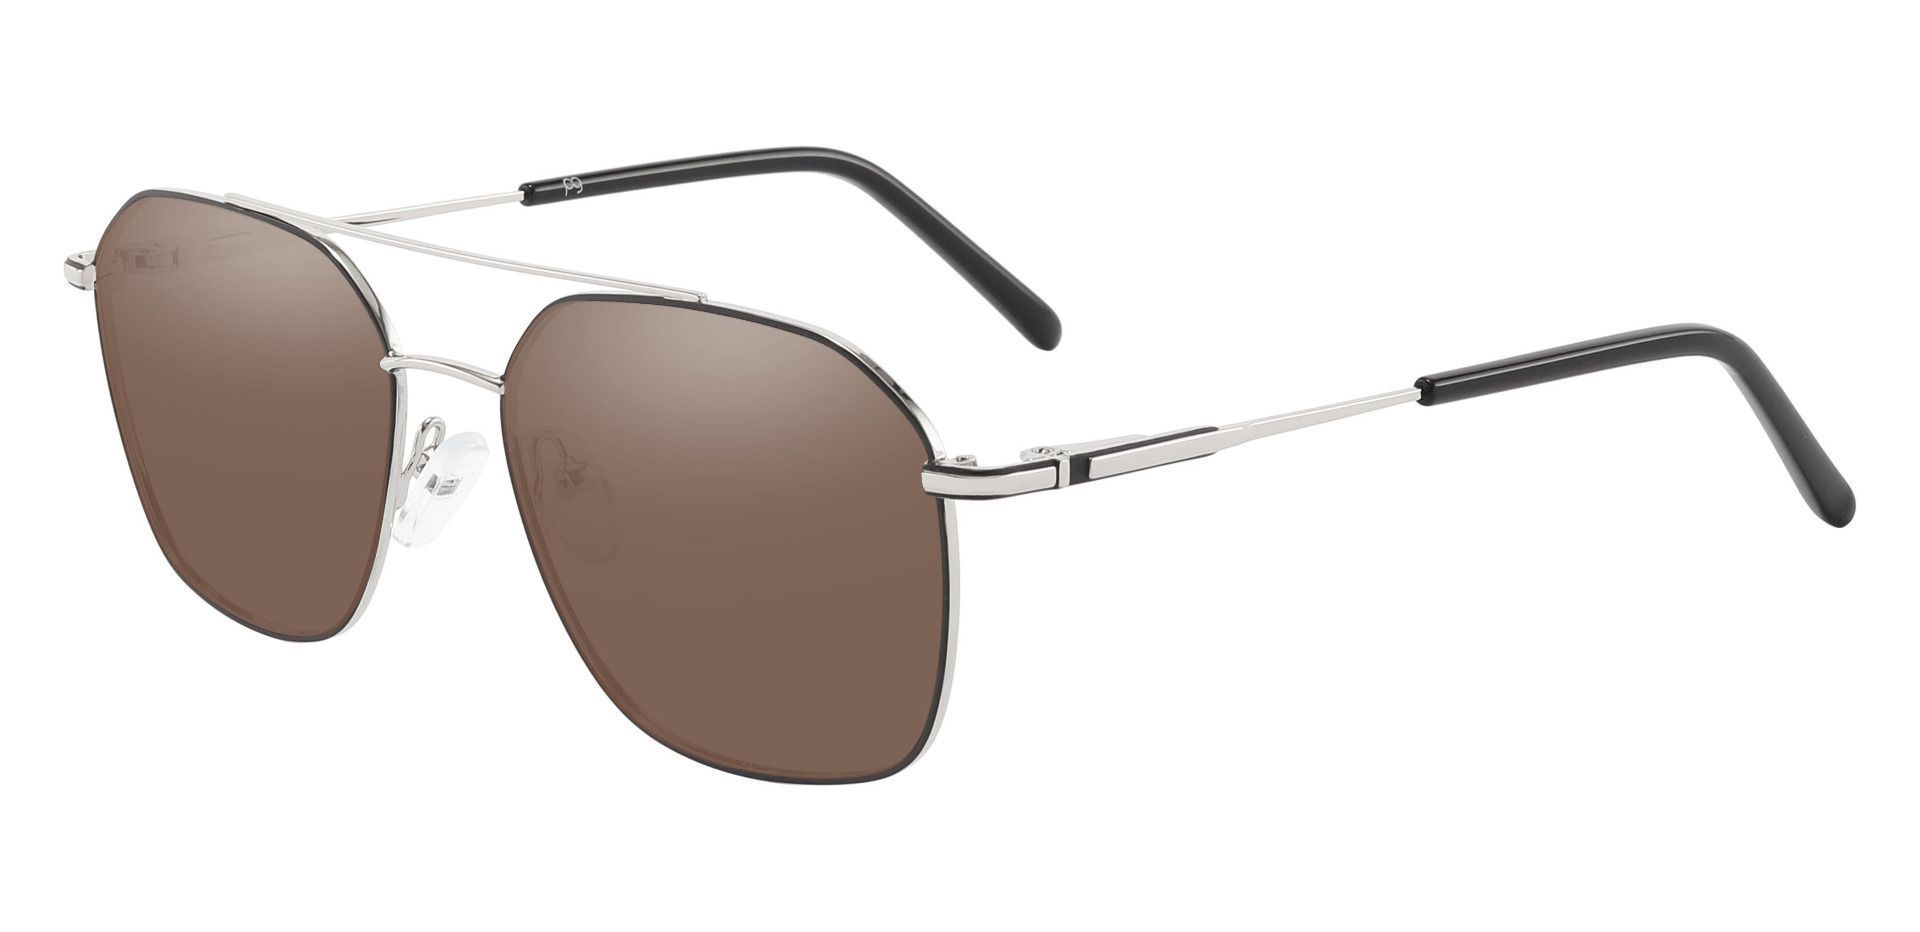 Harvey Aviator Reading Sunglasses - Silver Frame With Brown Lenses